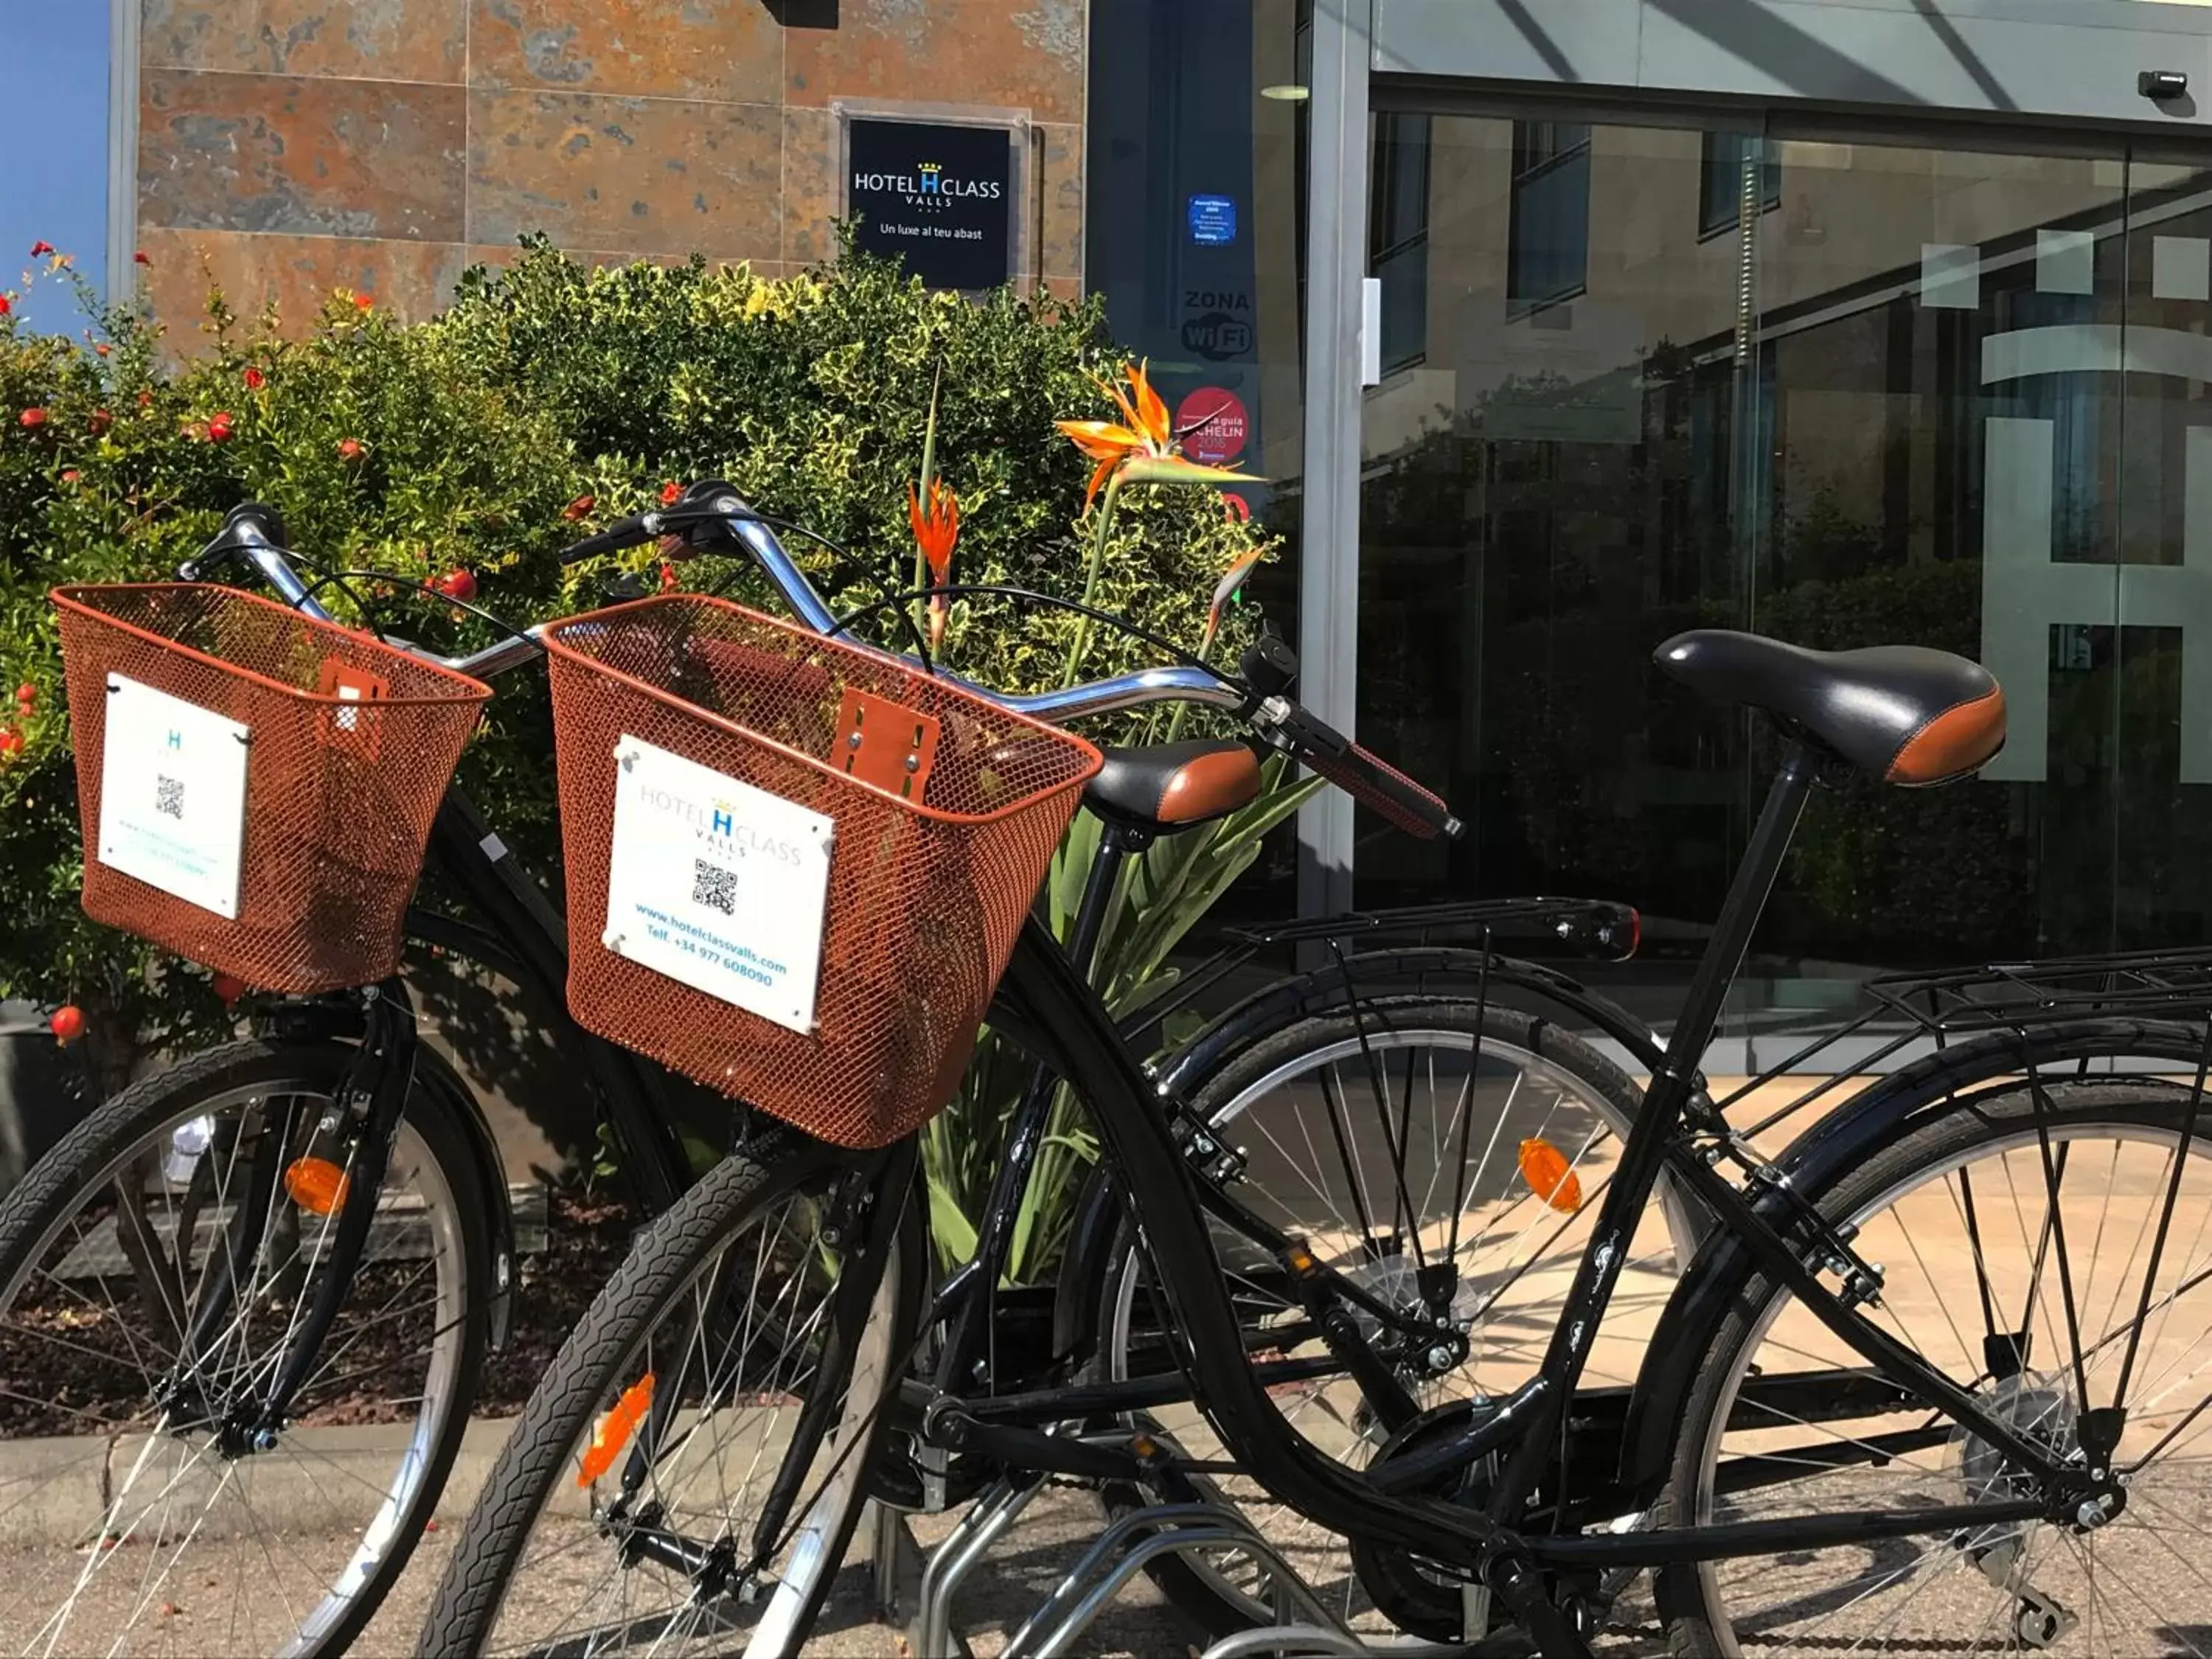 Cycling, Biking in Hotel Class Valls